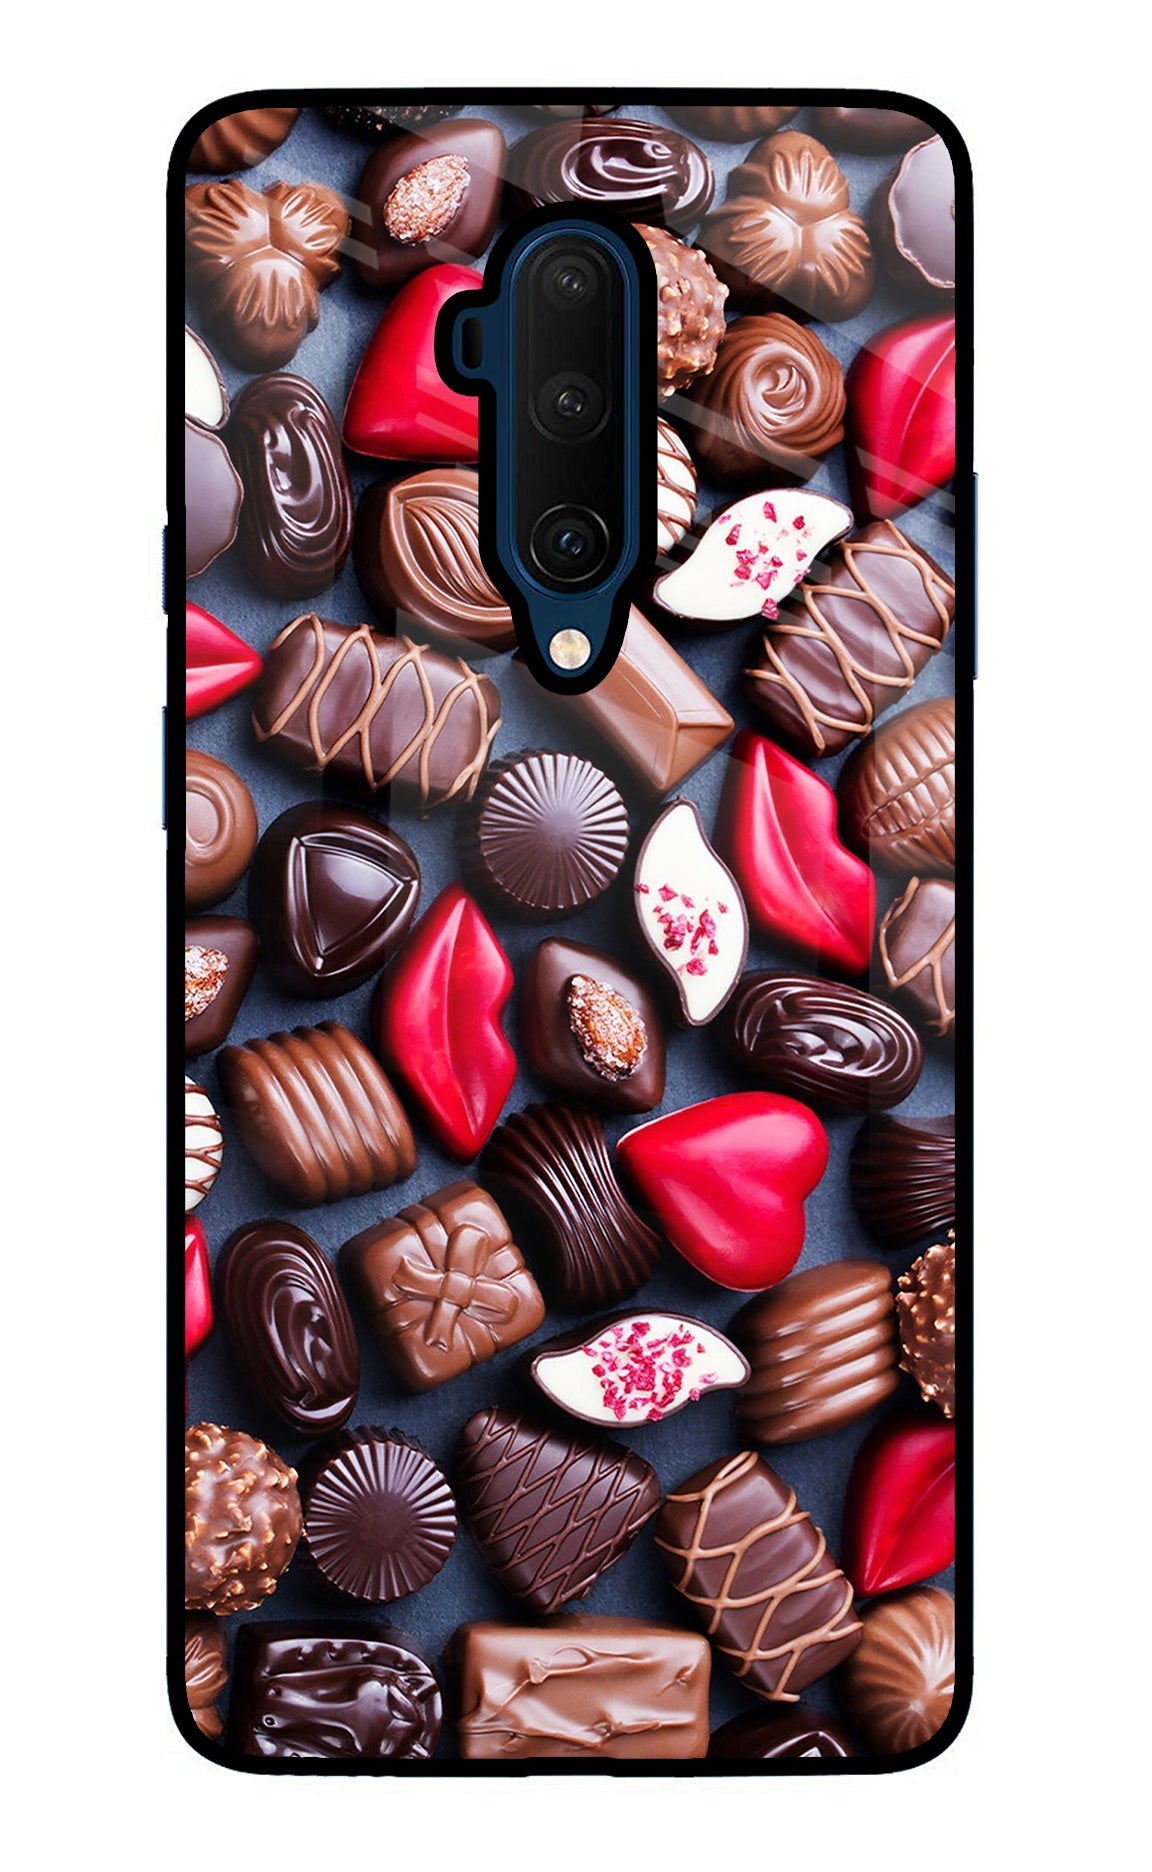 Chocolates Oneplus 7T Pro Glass Case